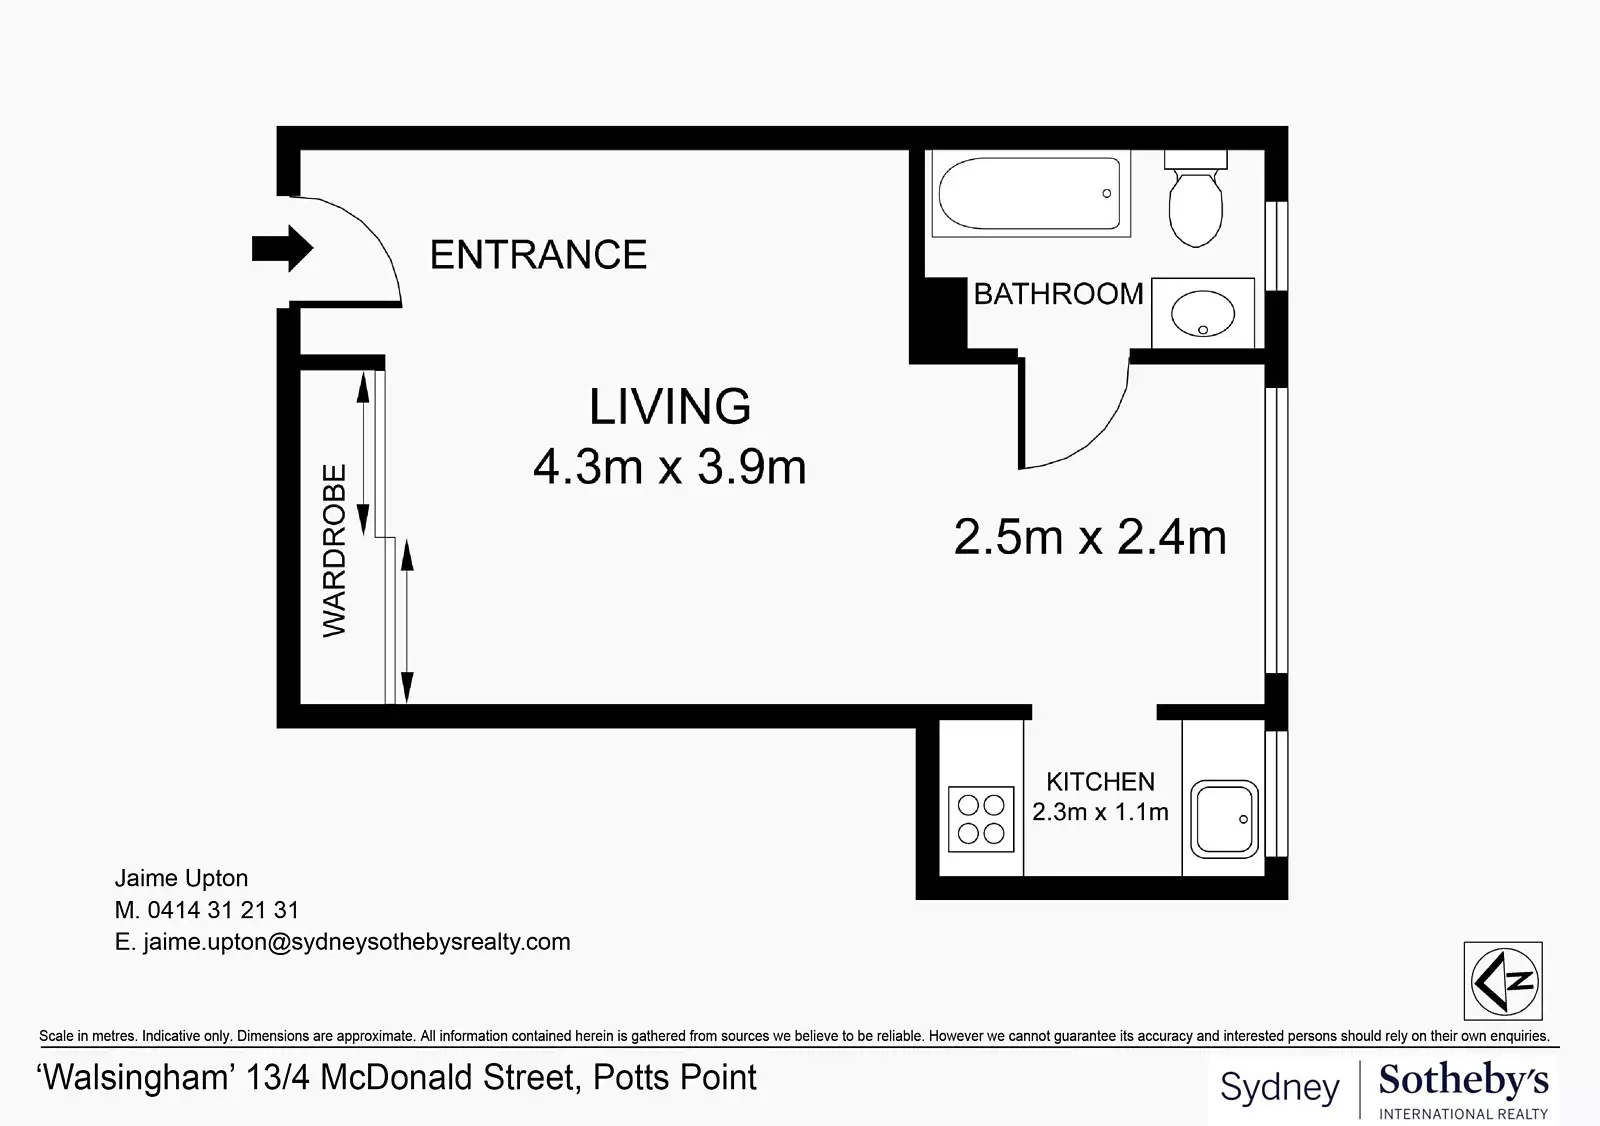 13/4 McDonald Street, Potts Point Sold by Sydney Sotheby's International Realty - image 9